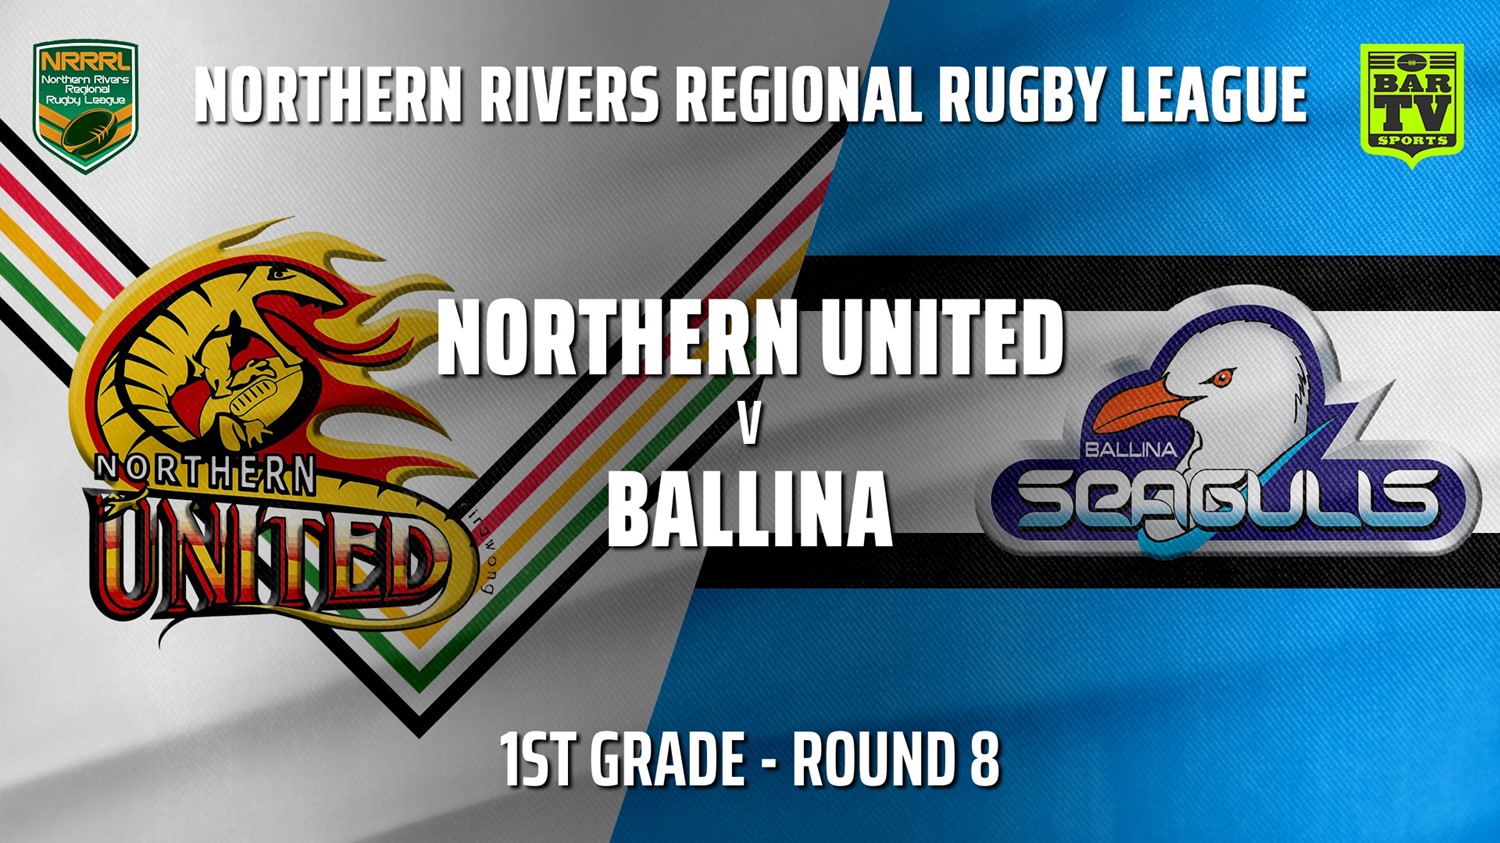 210627-Northern Rivers Round 8 - 1st Grade - Northern United v Ballina Seagulls Slate Image